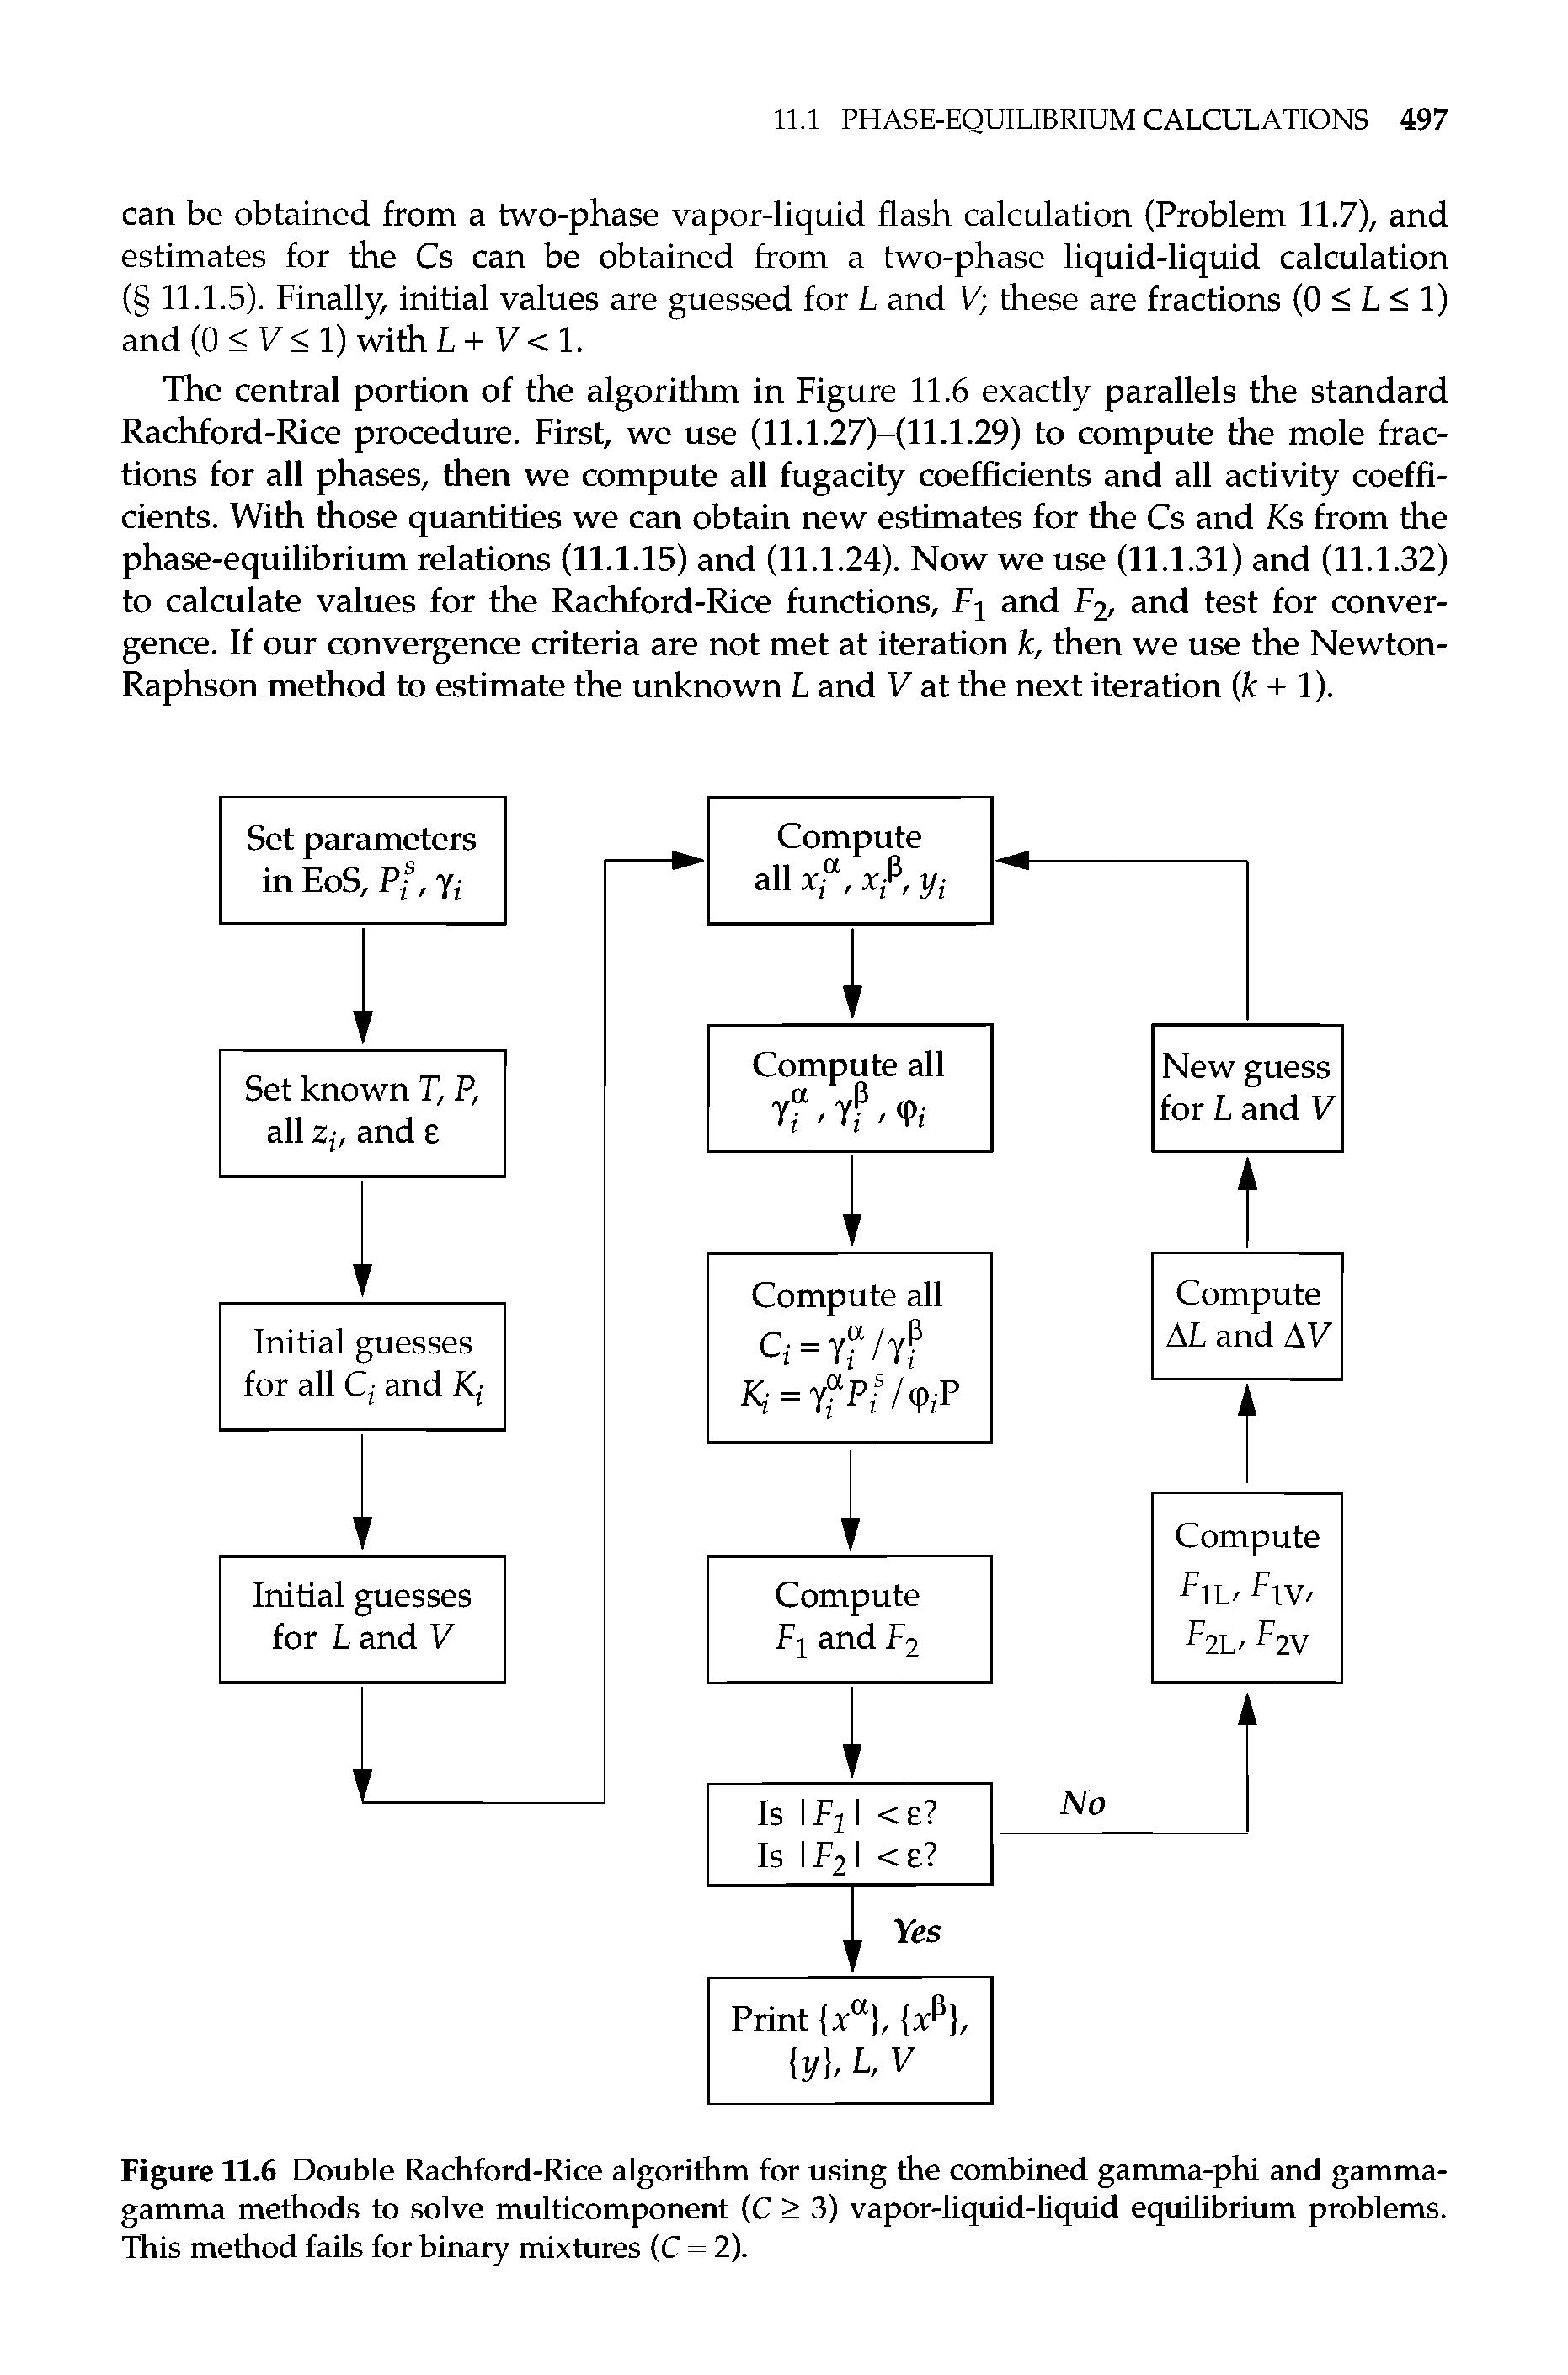 Figure 11.6 Double Rachford-Rice algorithm for using the combined gamma-phi and gamma-gamma methods to solve multicomponent (C > 3) vapor-Uquid-Uquid equilibrium problems. This method fails for binary mixtures (C = 2).